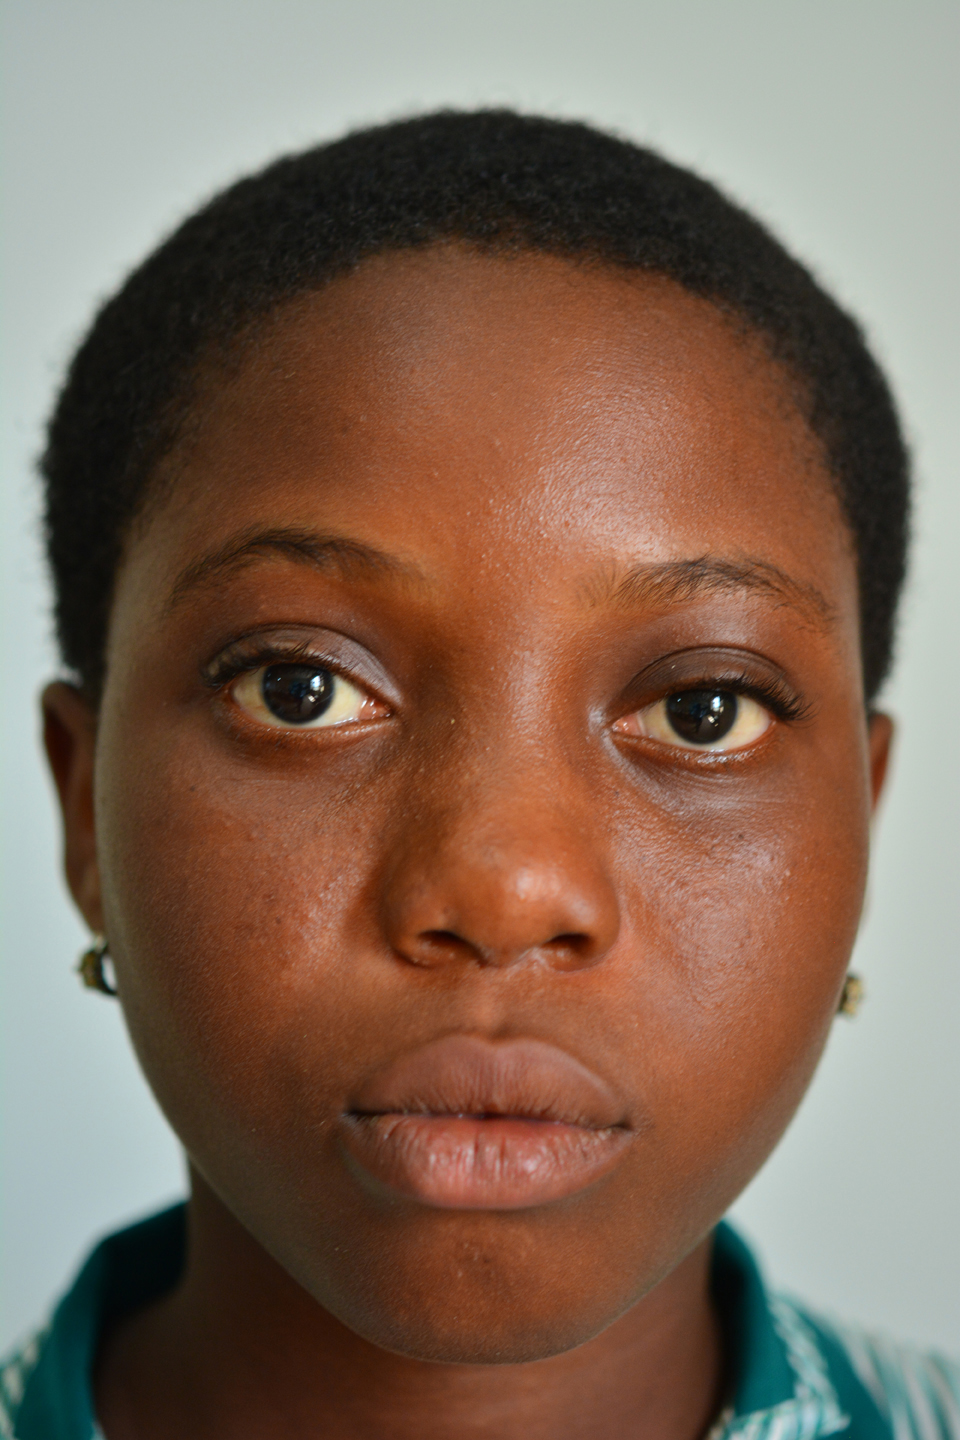  Skin Bleaching  in Ghana The Next Generation Pulitzer 